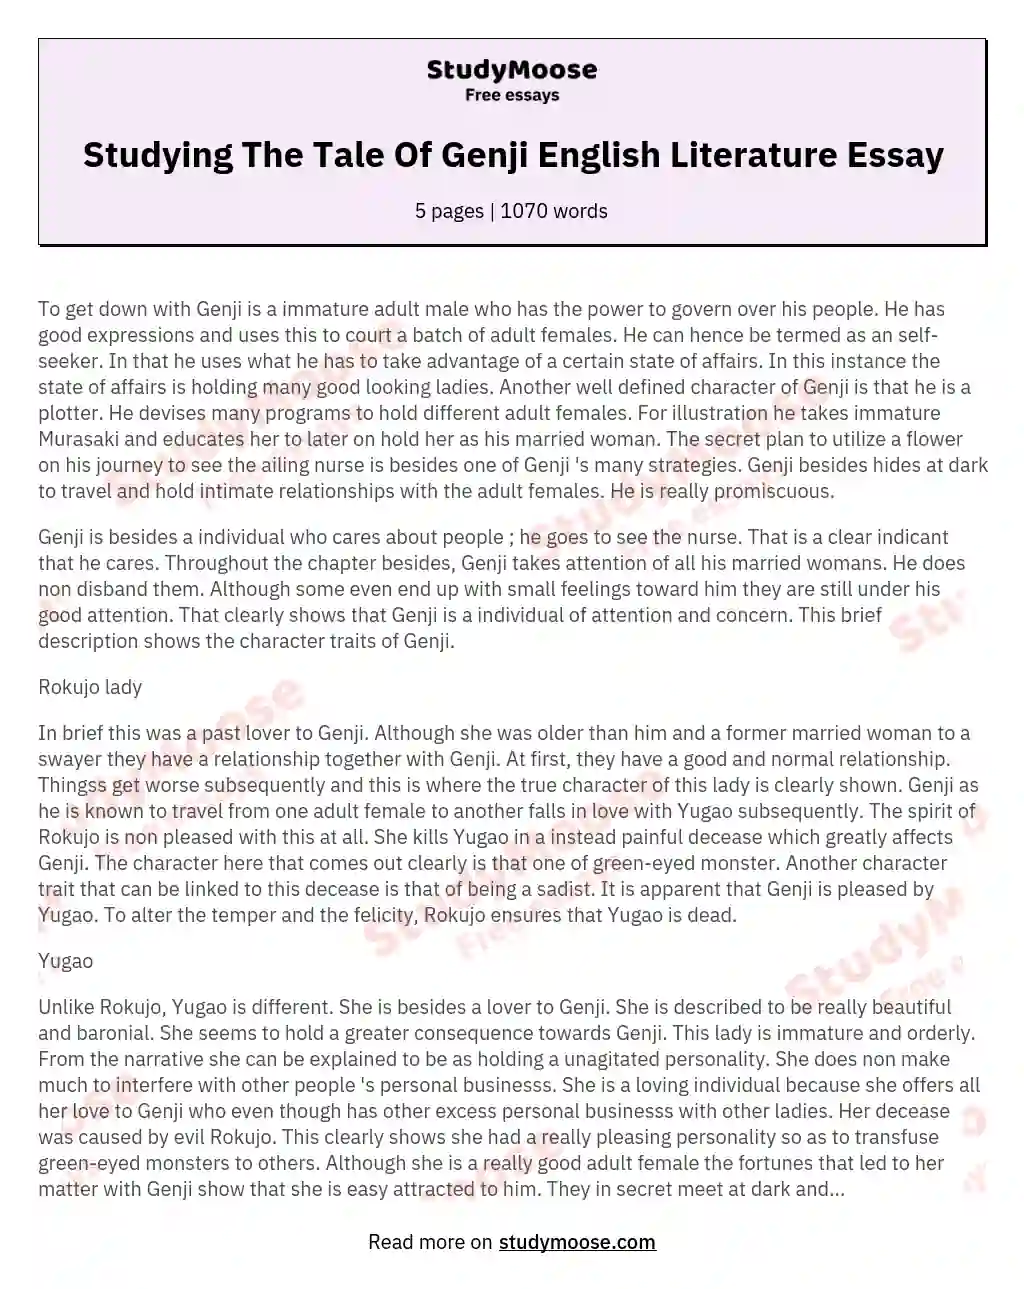 Studying The Tale Of Genji English Literature Essay essay